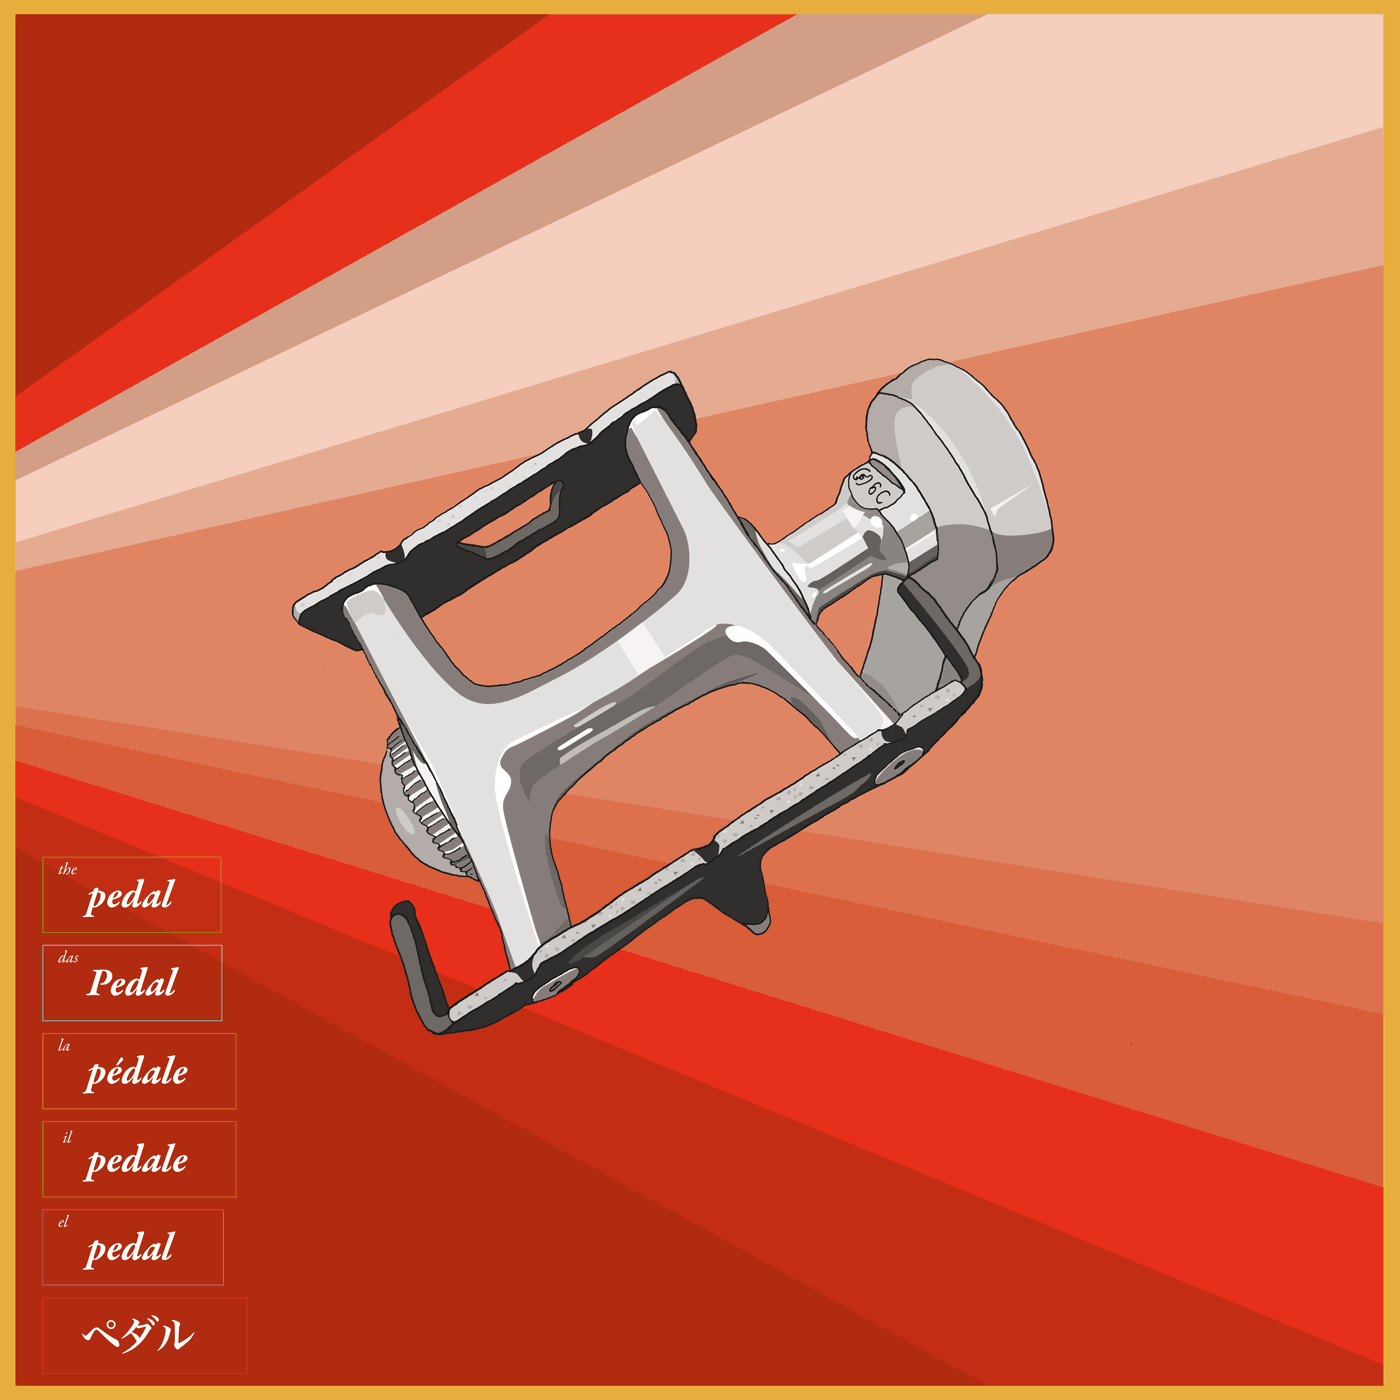 MKS pedal illustration